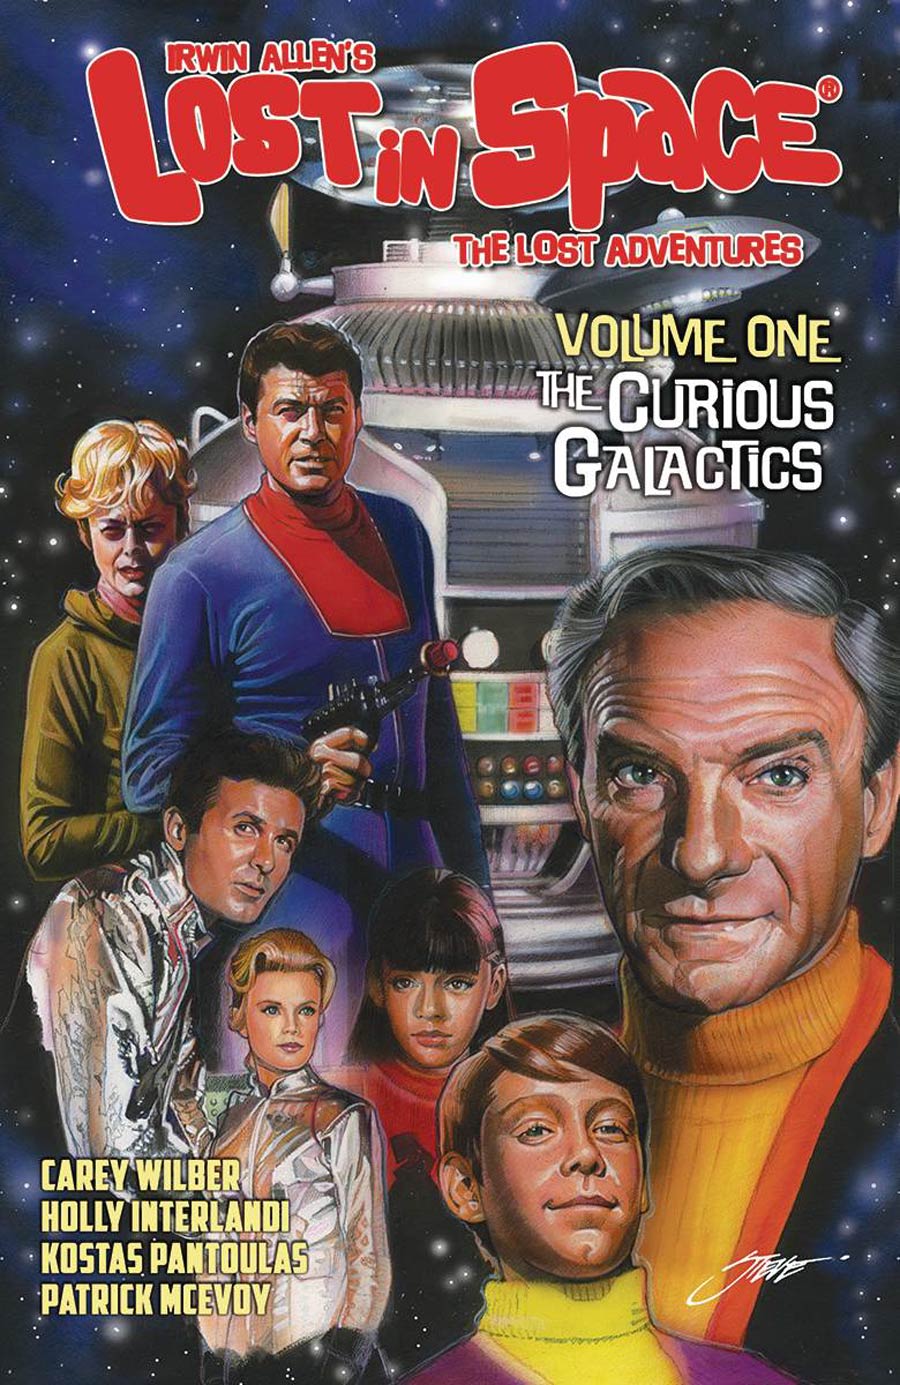 Irwin Allens Lost In Space Lost Adventures Vol 1 Curious Galactics HC